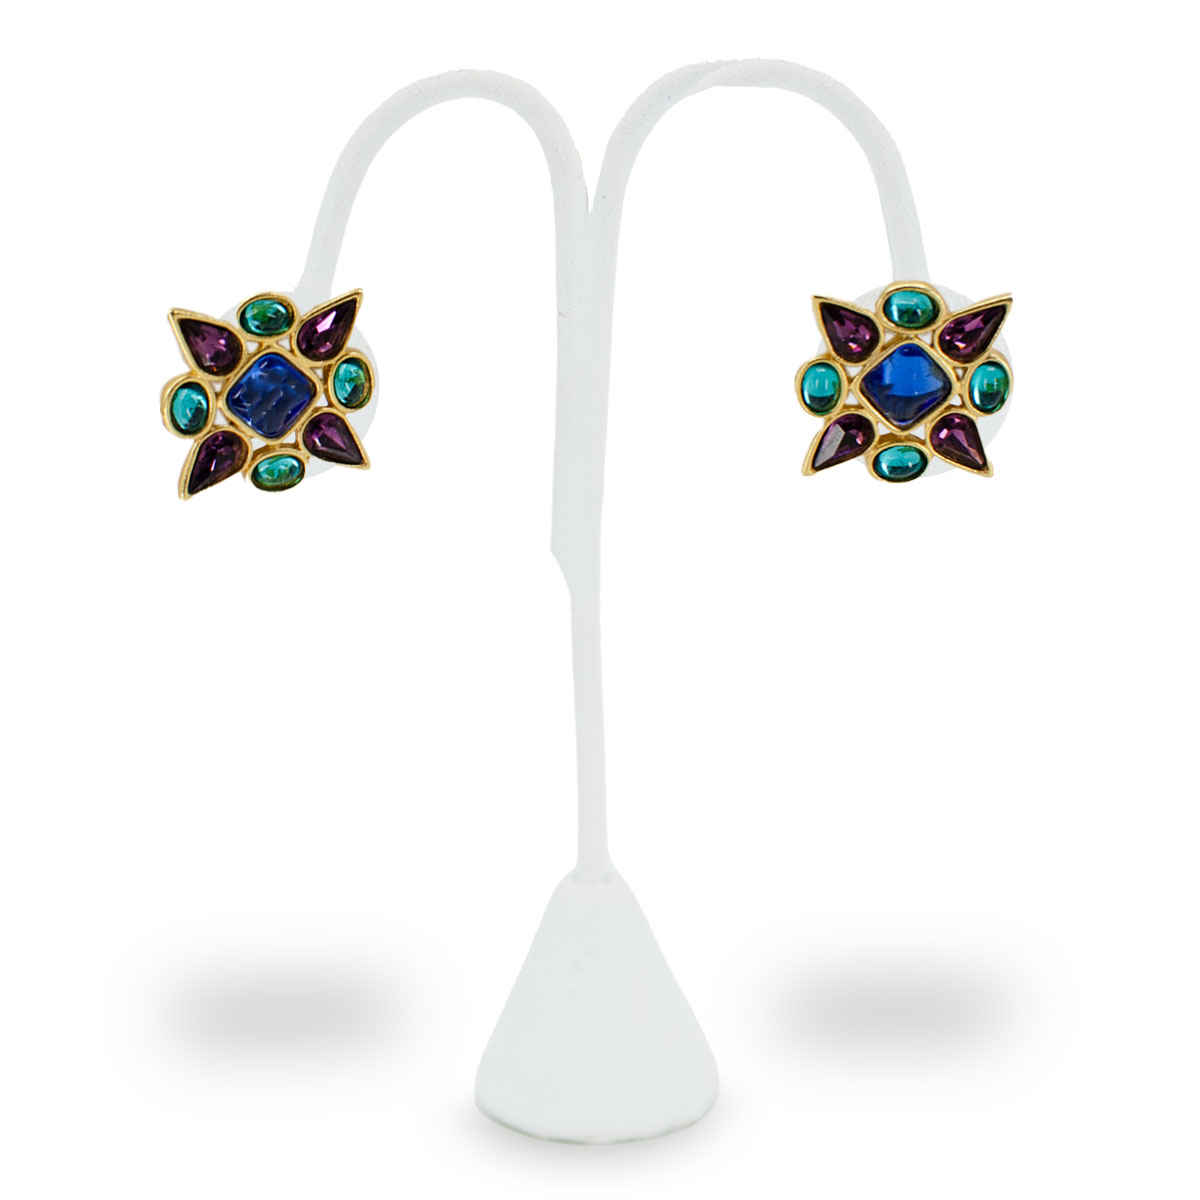 YVES SAINT LAURENT jeweled earrings